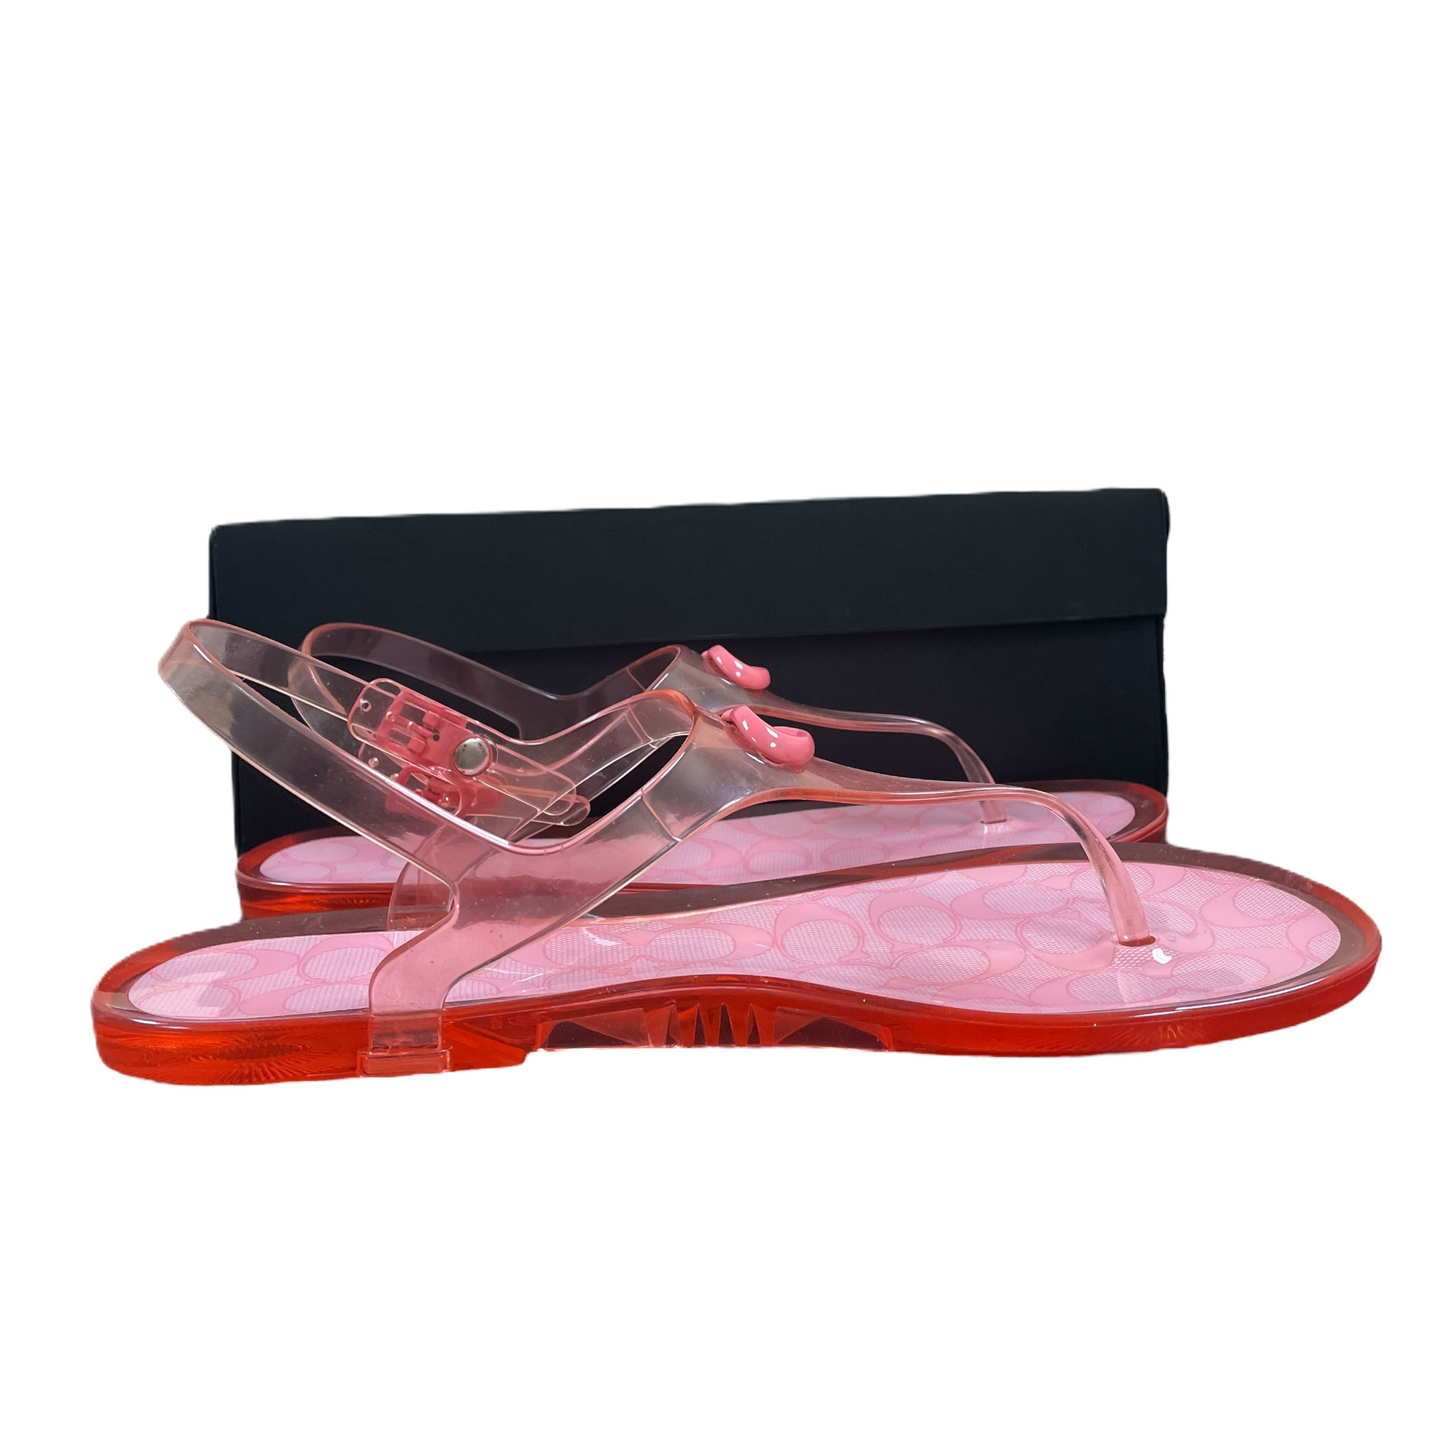 Pink Sandals Designer By Coach, Size: 10